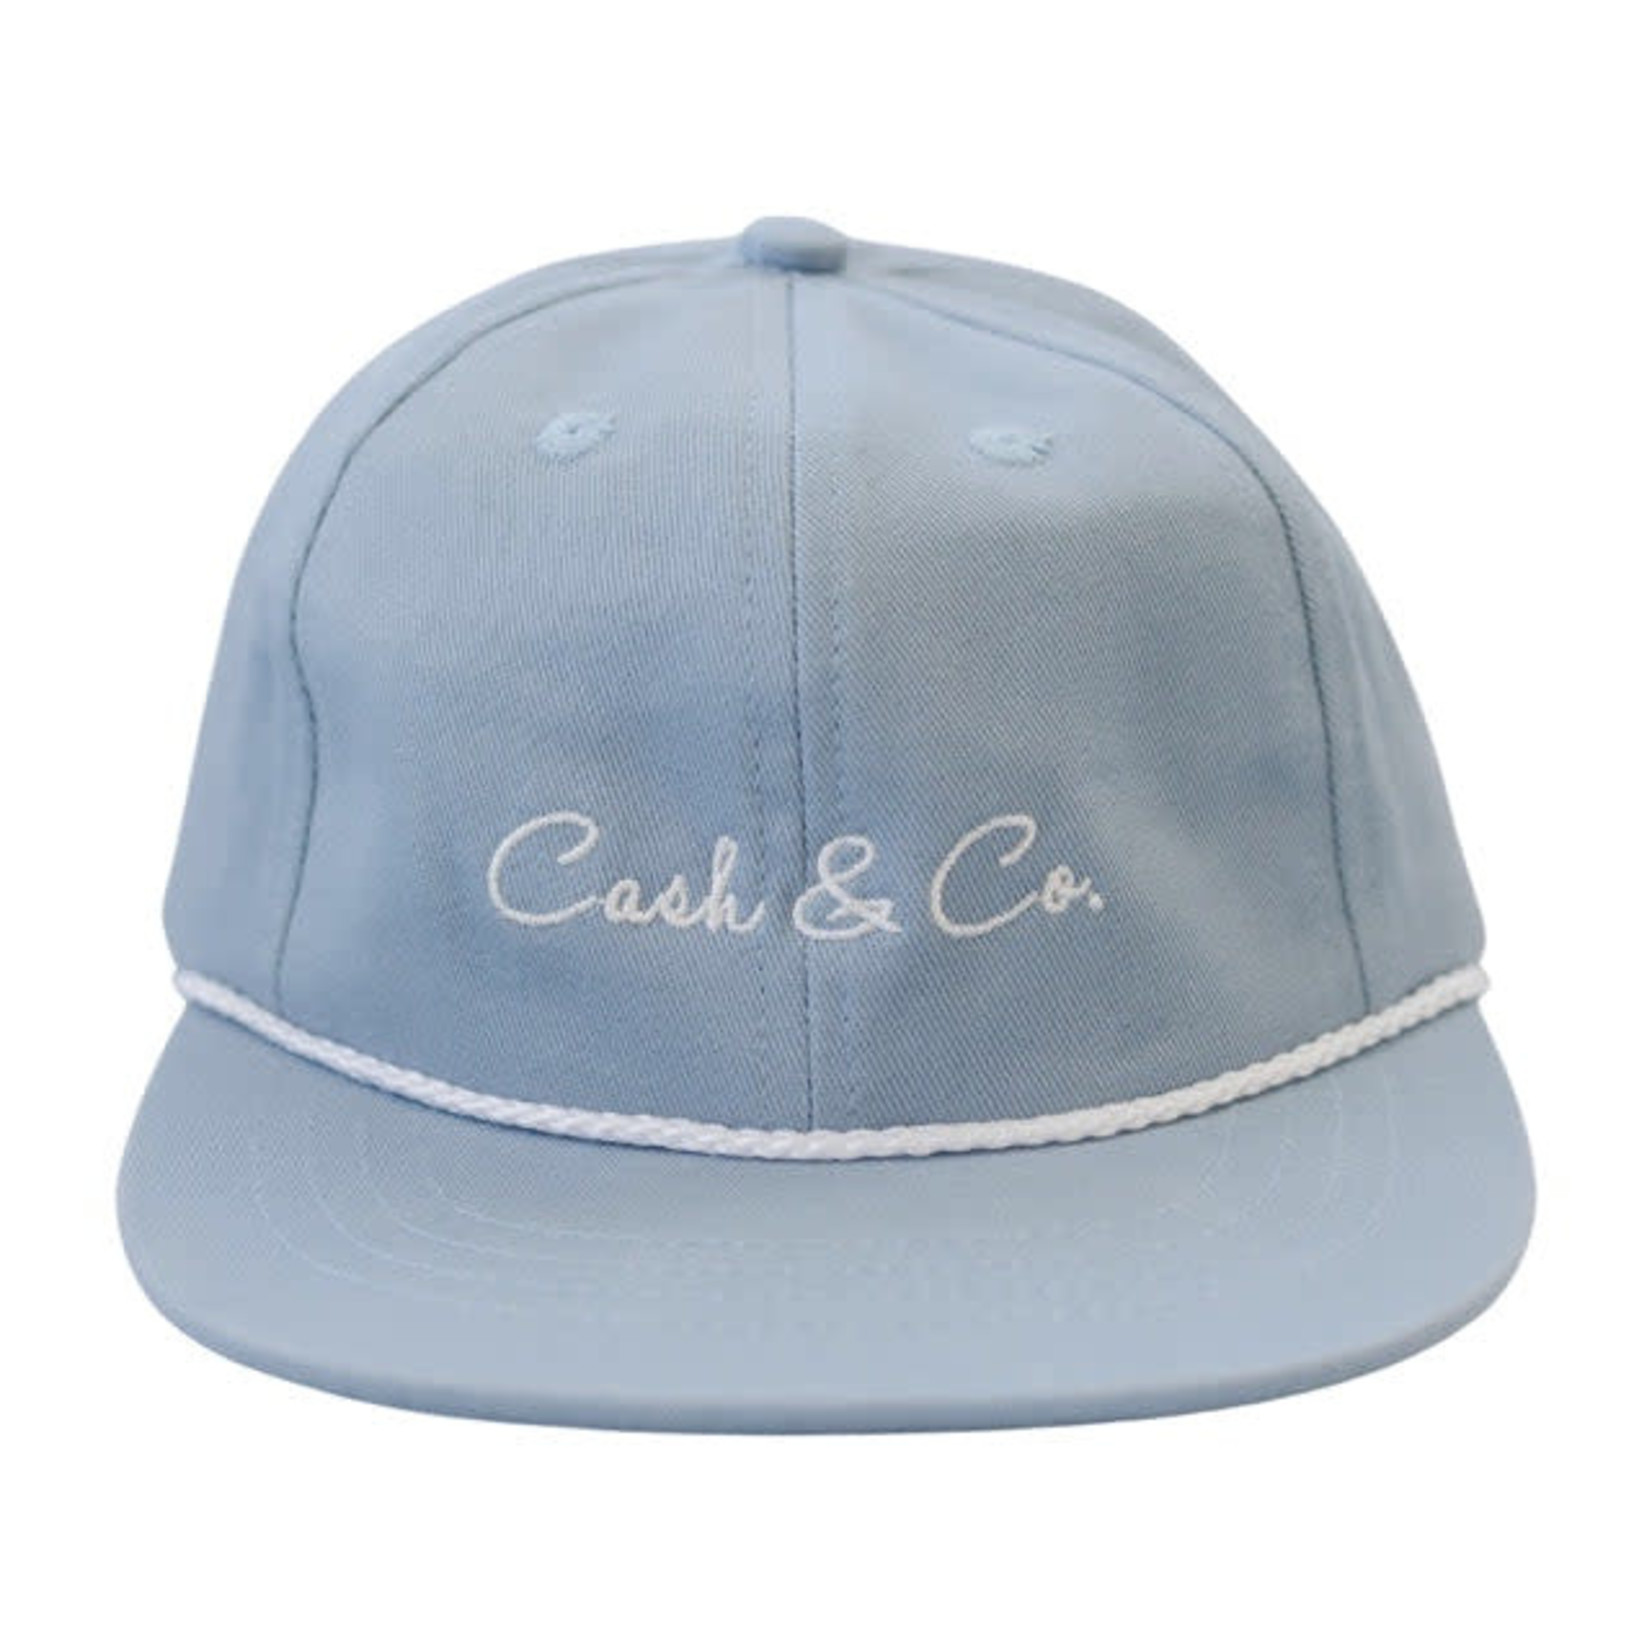 Cash & Co Malibu Snapback Cap